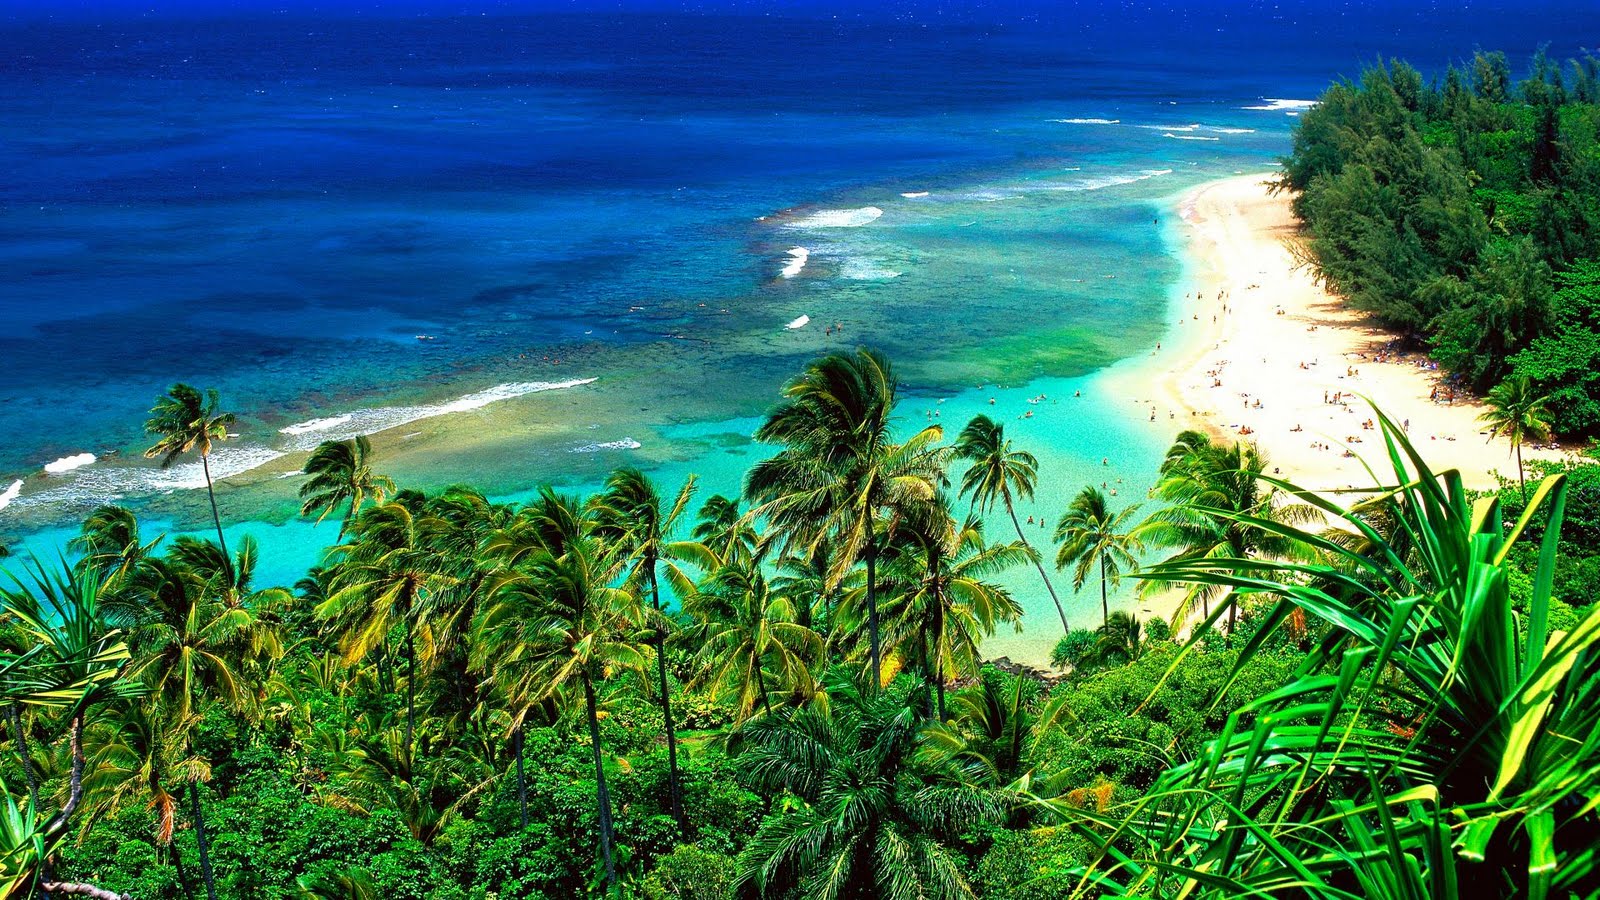 https://blogger.googleusercontent.com/img/b/R29vZ2xl/AVvXsEia-526XOFpAAljRdy5u5tLPnYVUYHdHebEUvqSr6l08UCGuQ9V6QIBD0CKzioYJt8MoCY3O0cJQPu7541BPkgReWu6WV1HhMTAHZvYS3DlFyFf0c24YwkmZ4DOghBxIU3pUlzkP2vPZSf1/s1600/Kee+Beach%252C+Kauai%252C+Hawaii.jpg